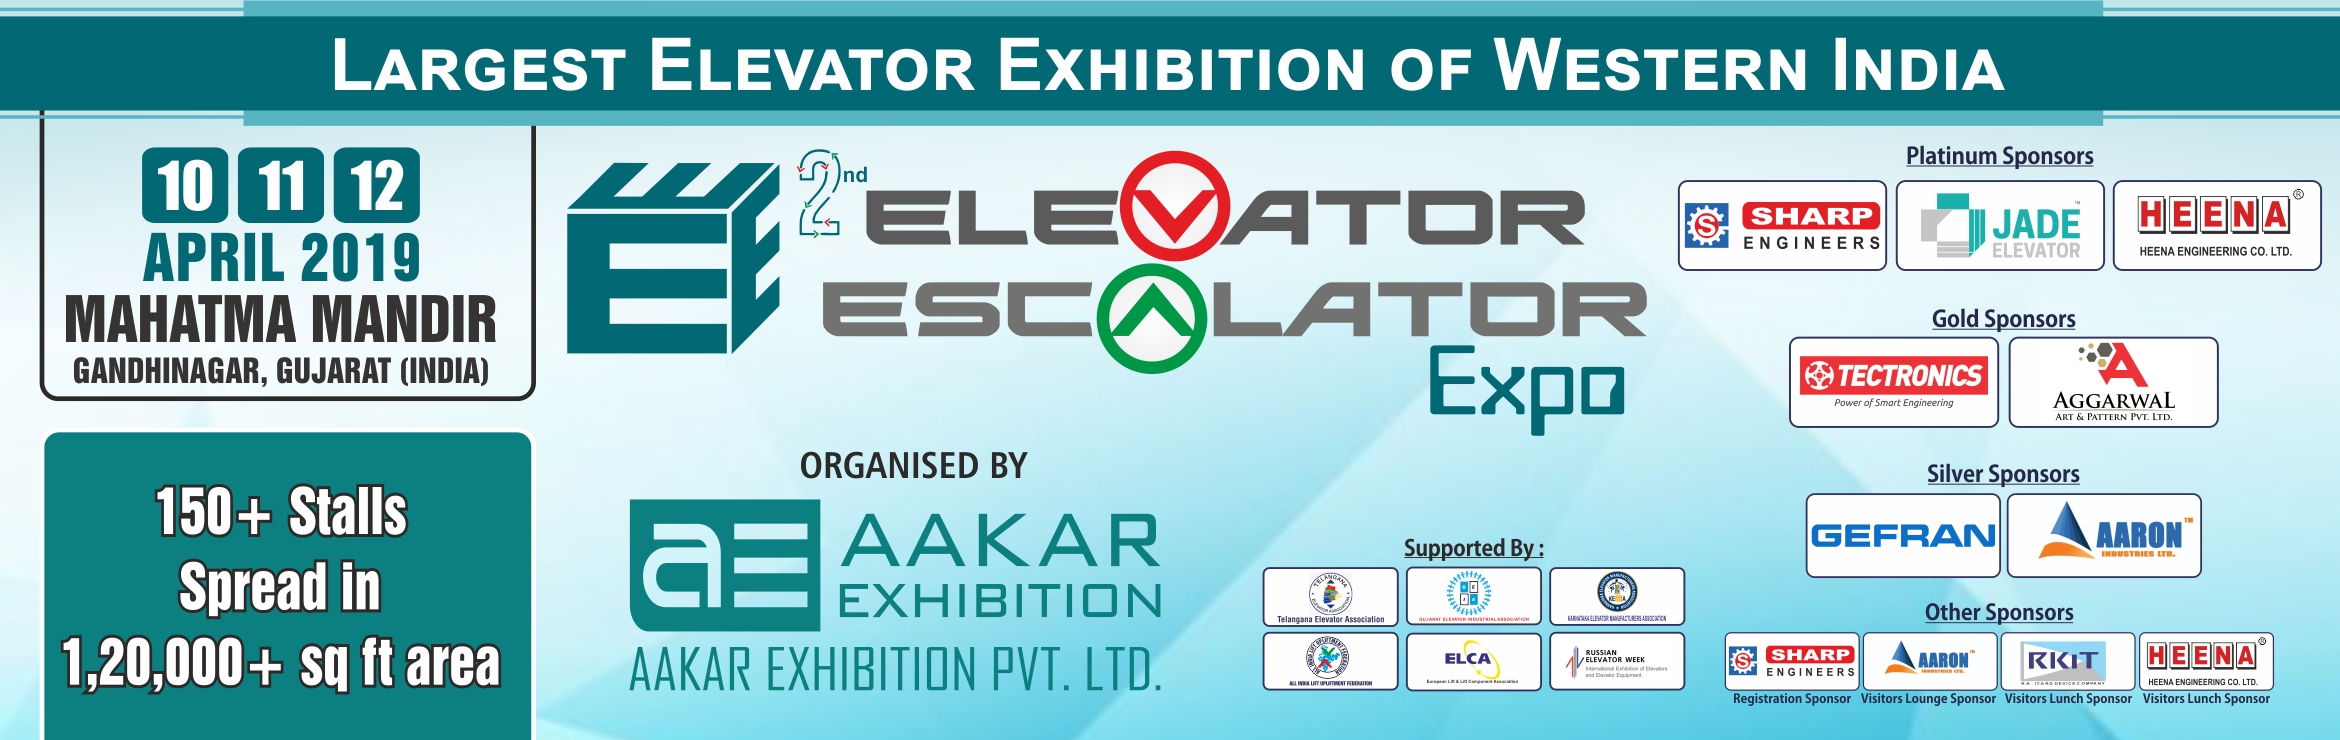 2nd Elevator Escalator Expo 2019, Gandhinagar, Gujarat, India